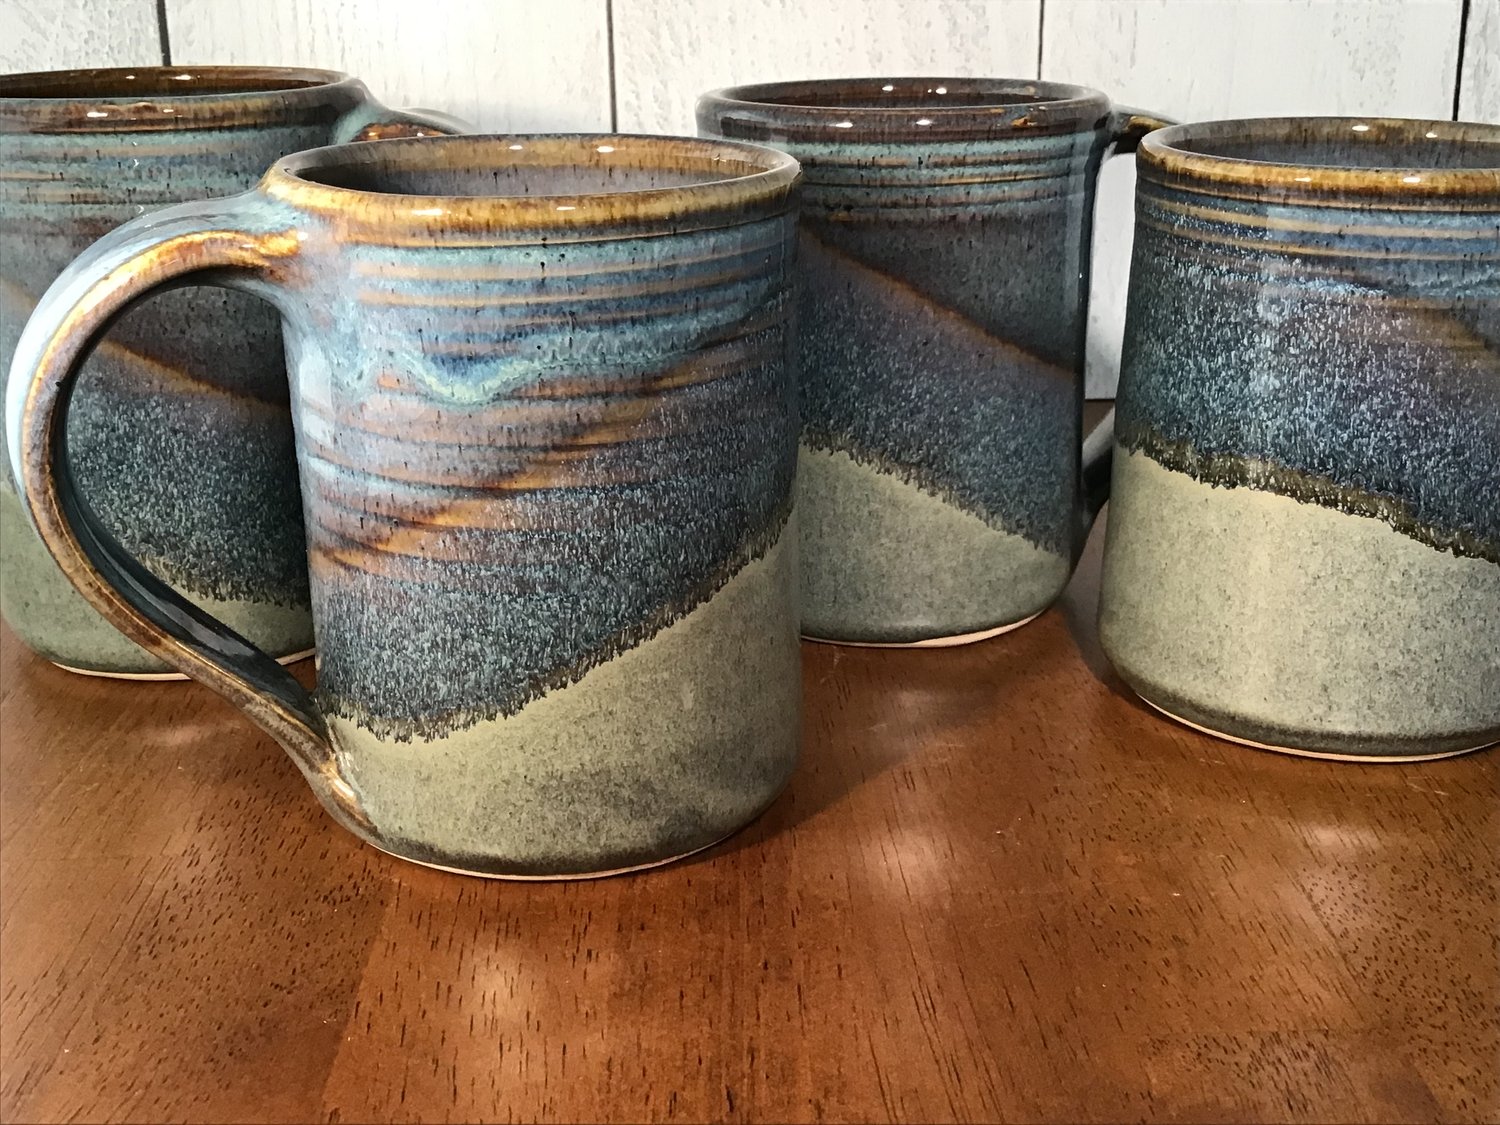 Handmade pottery ceramic handled mixing bowl — CRUTCHFIELD POTTERY